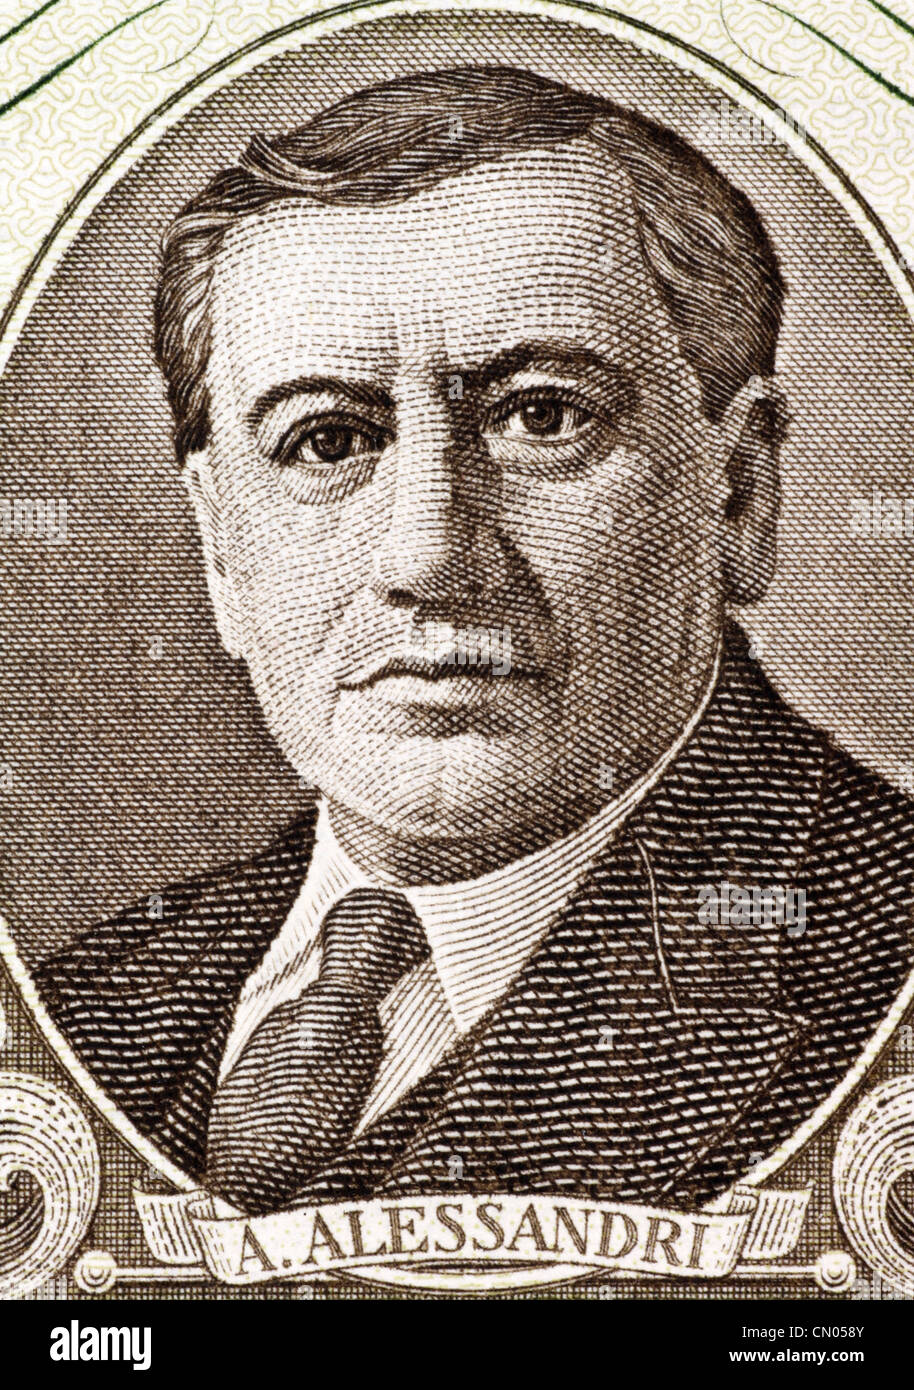 Arturo Alessandri (1868-1950) auf 50 Escudos 1964 Banknote aus Chile. Chilenischer Politiker. Stockfoto